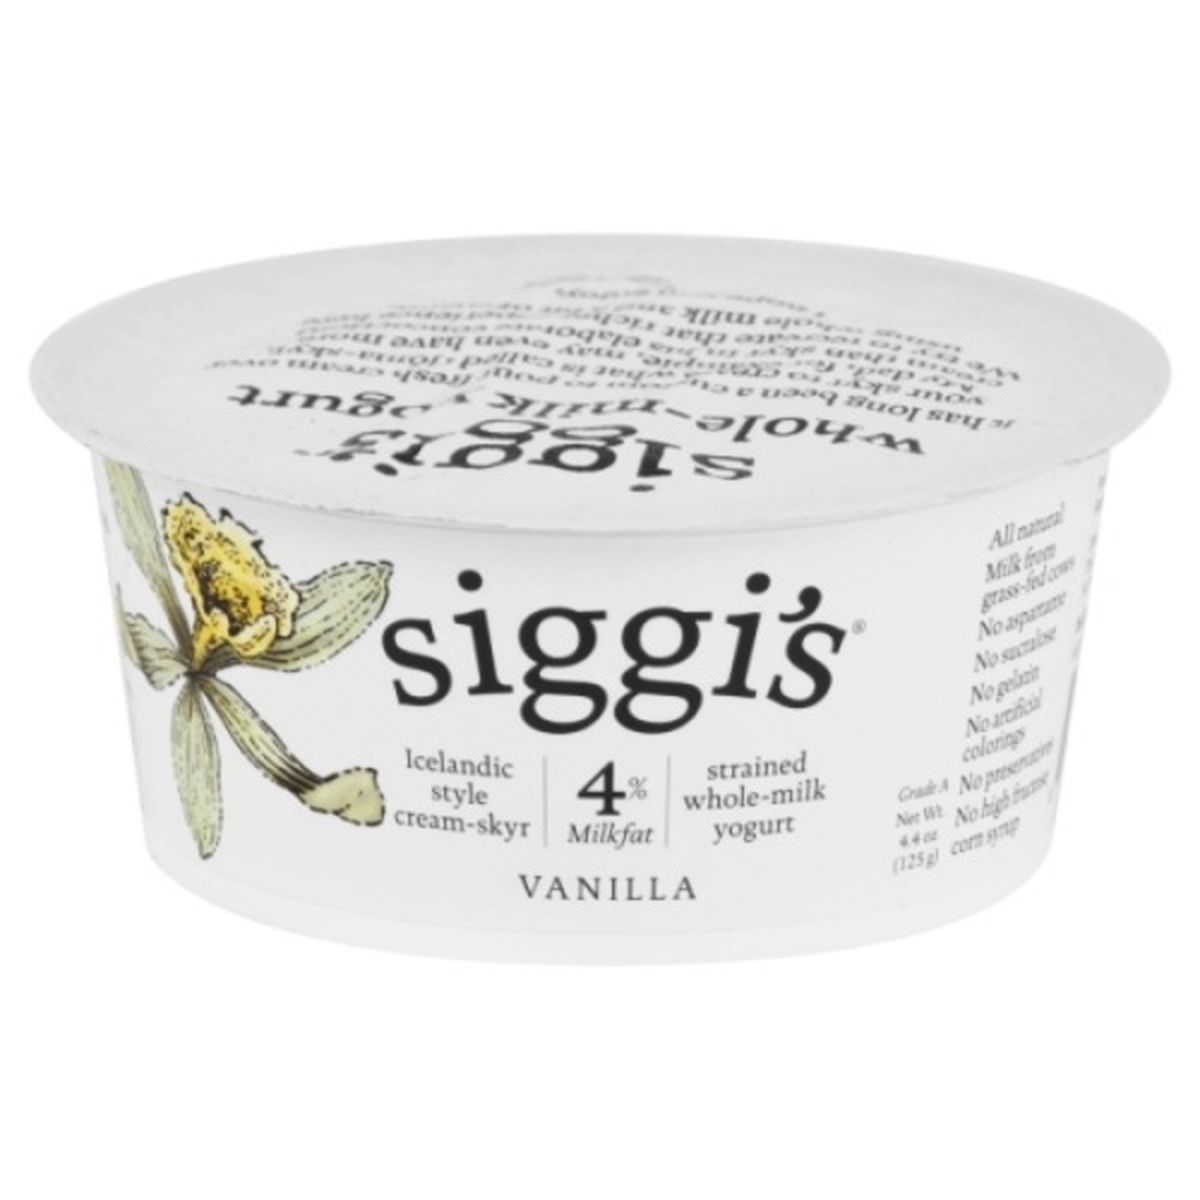 Calories in Siggi's Yogurt, Whole-Milk, Icelandic Style Cream-Skyr, Strained, Vanilla